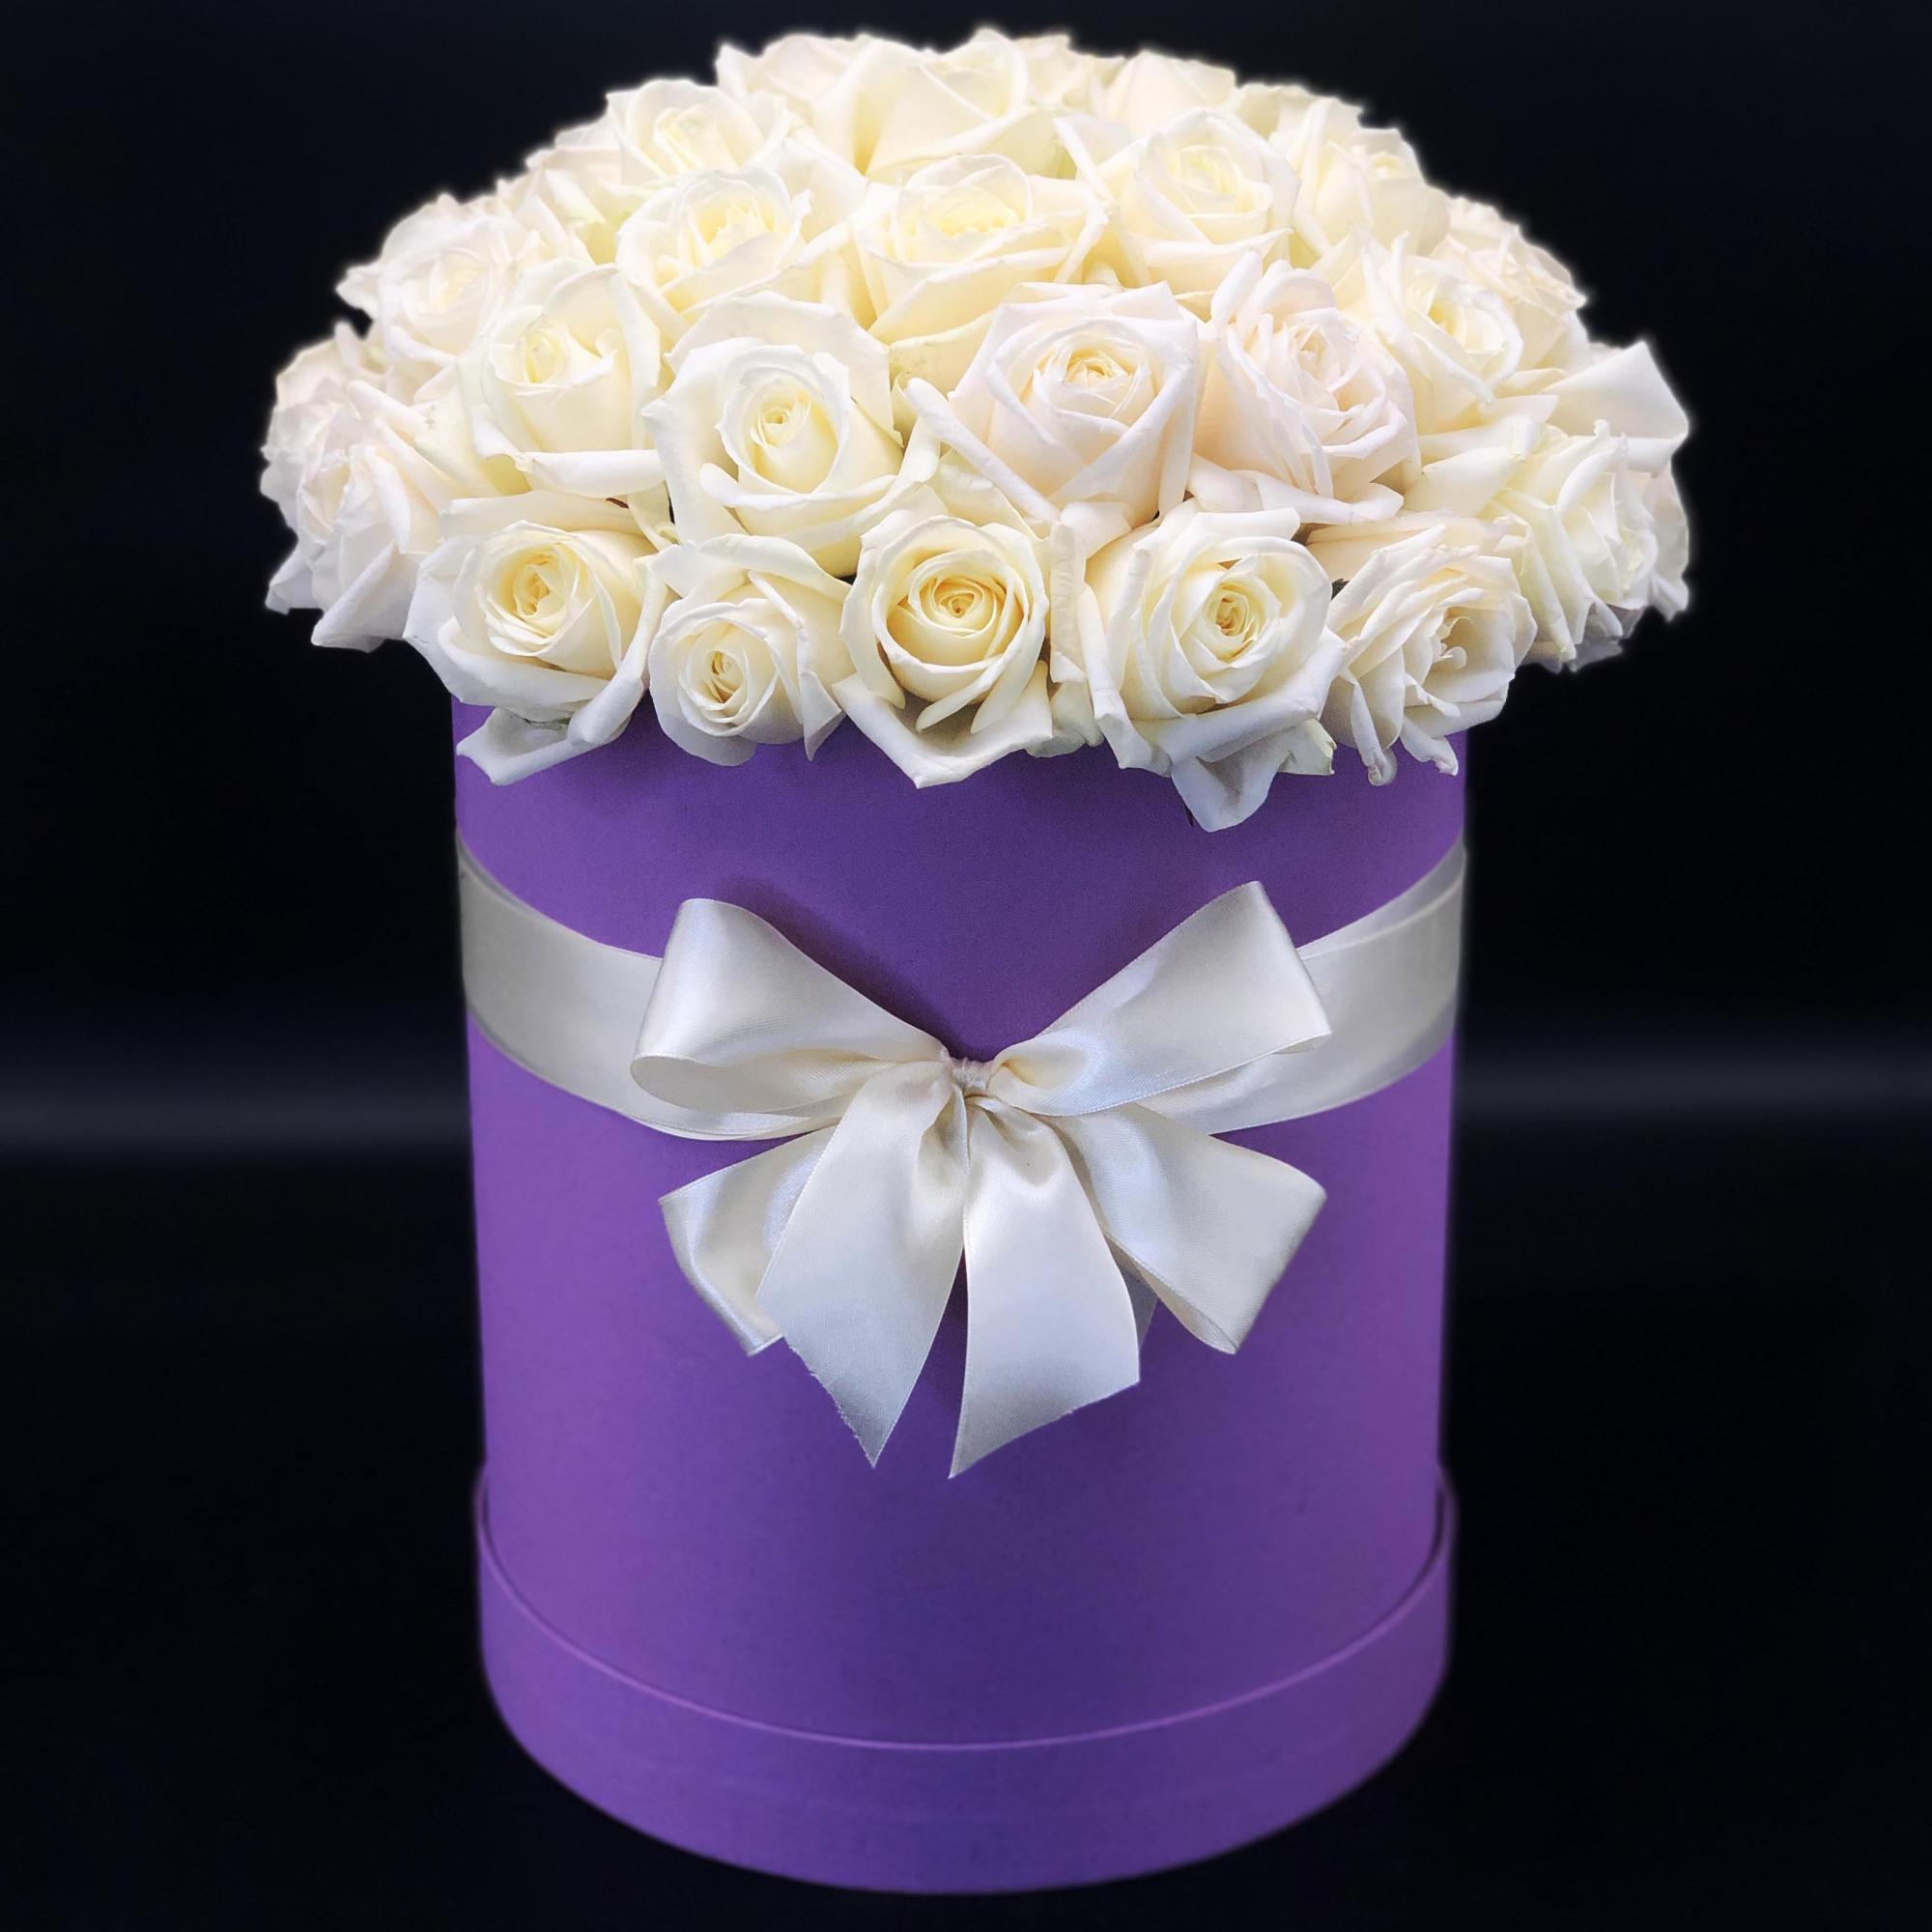  Belek Blumenbestellung 29 White Roses in a purple box 